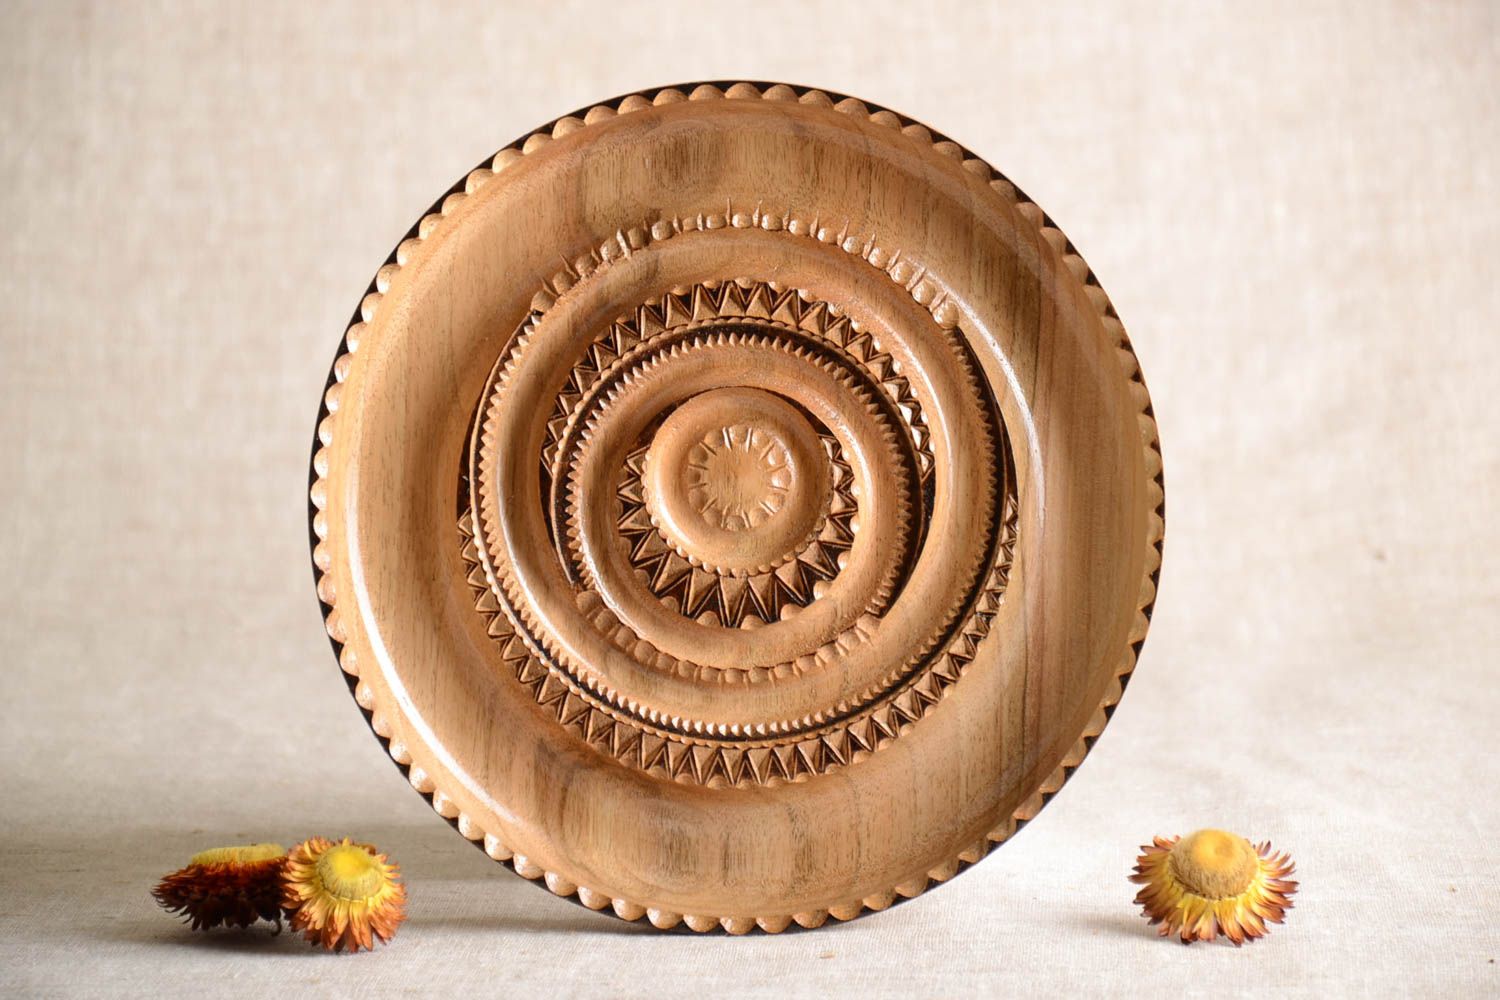 Handmade plate designer plate wooden dishes decor ideas kitchen decor wall decor photo 1